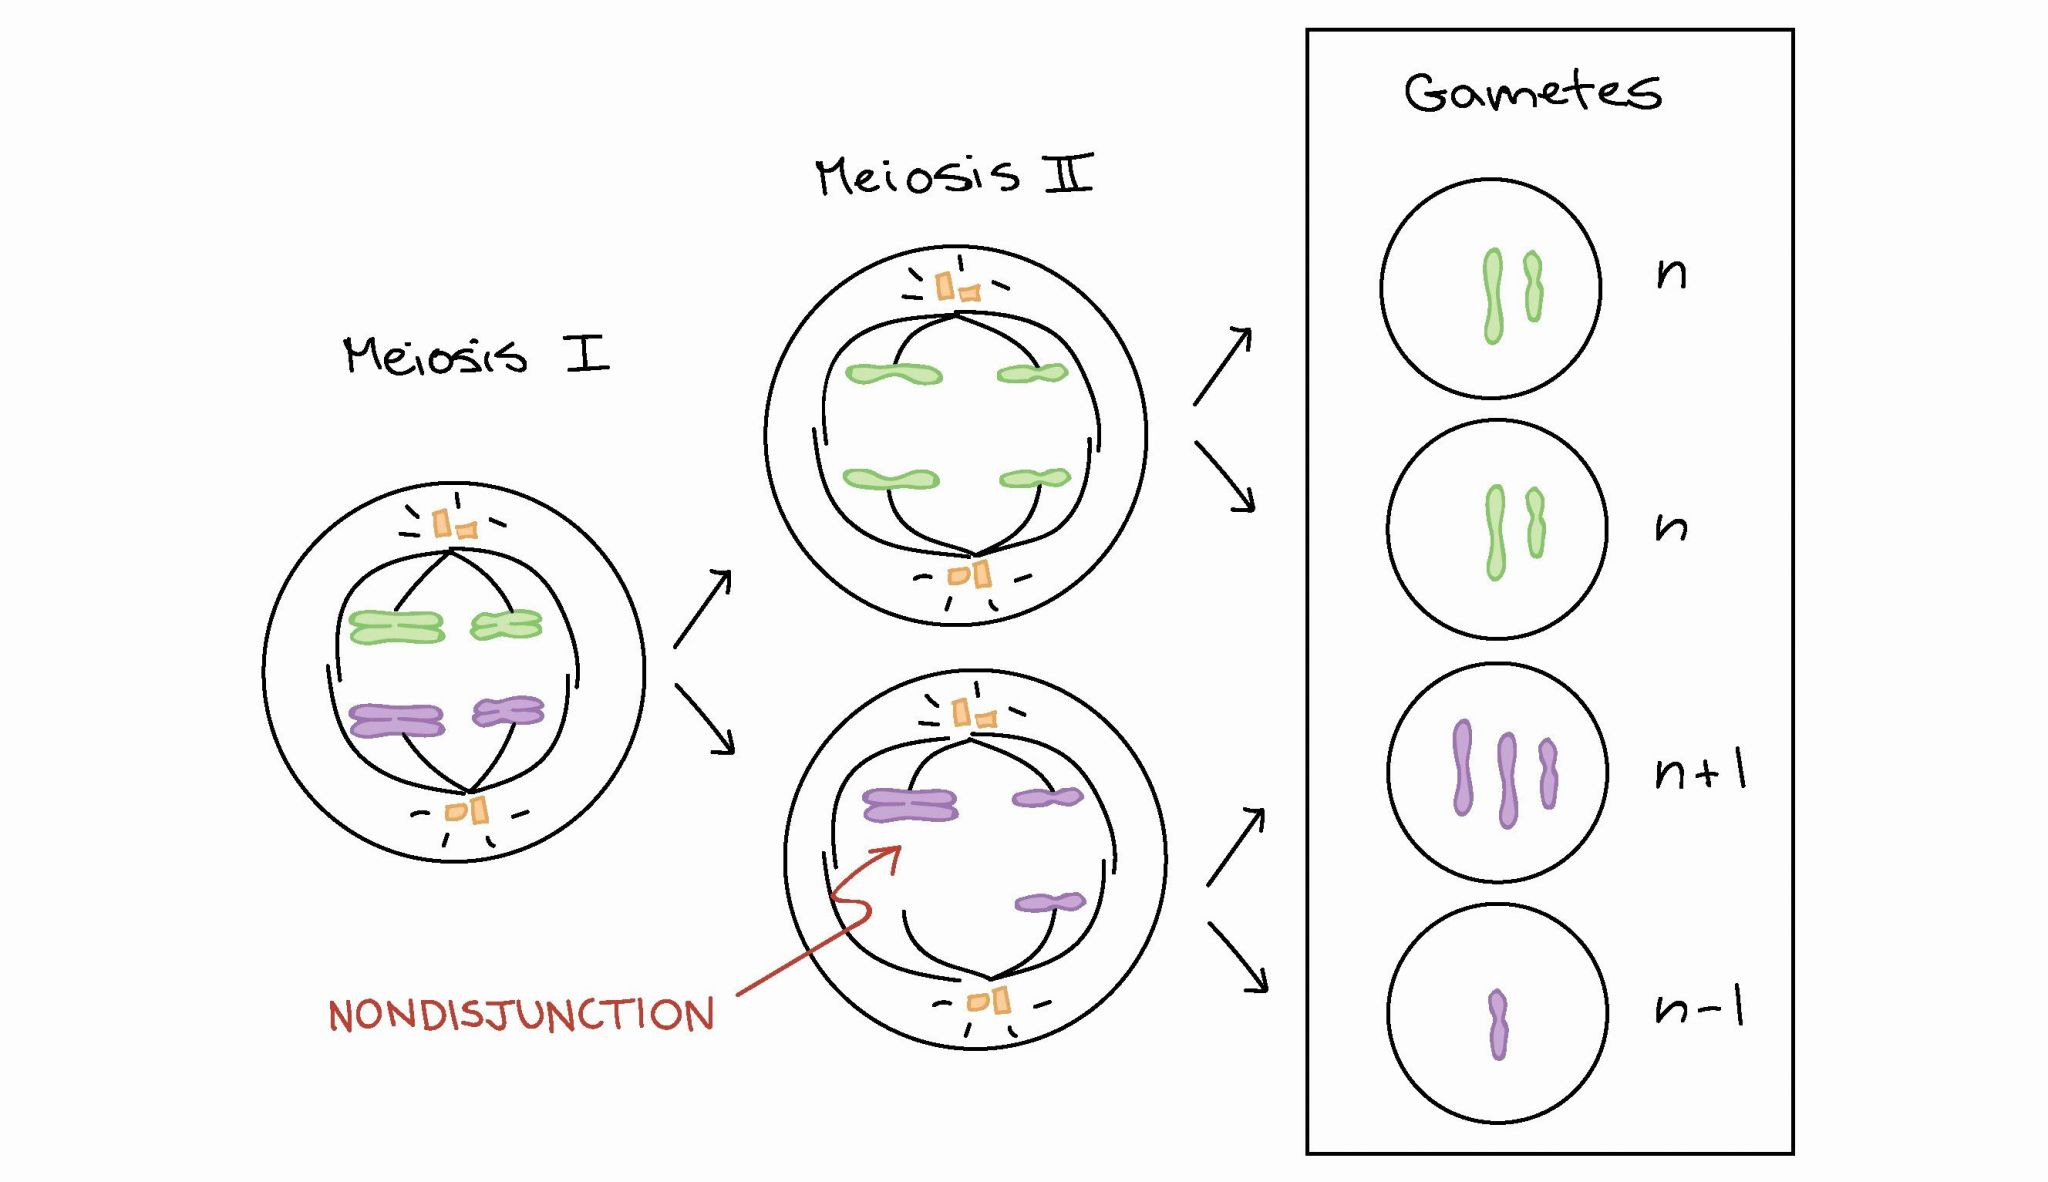 phases-of-meiosis-worksheet-answer-key-meiosis-vocabulary-worksheets-telophase-m-metaphase